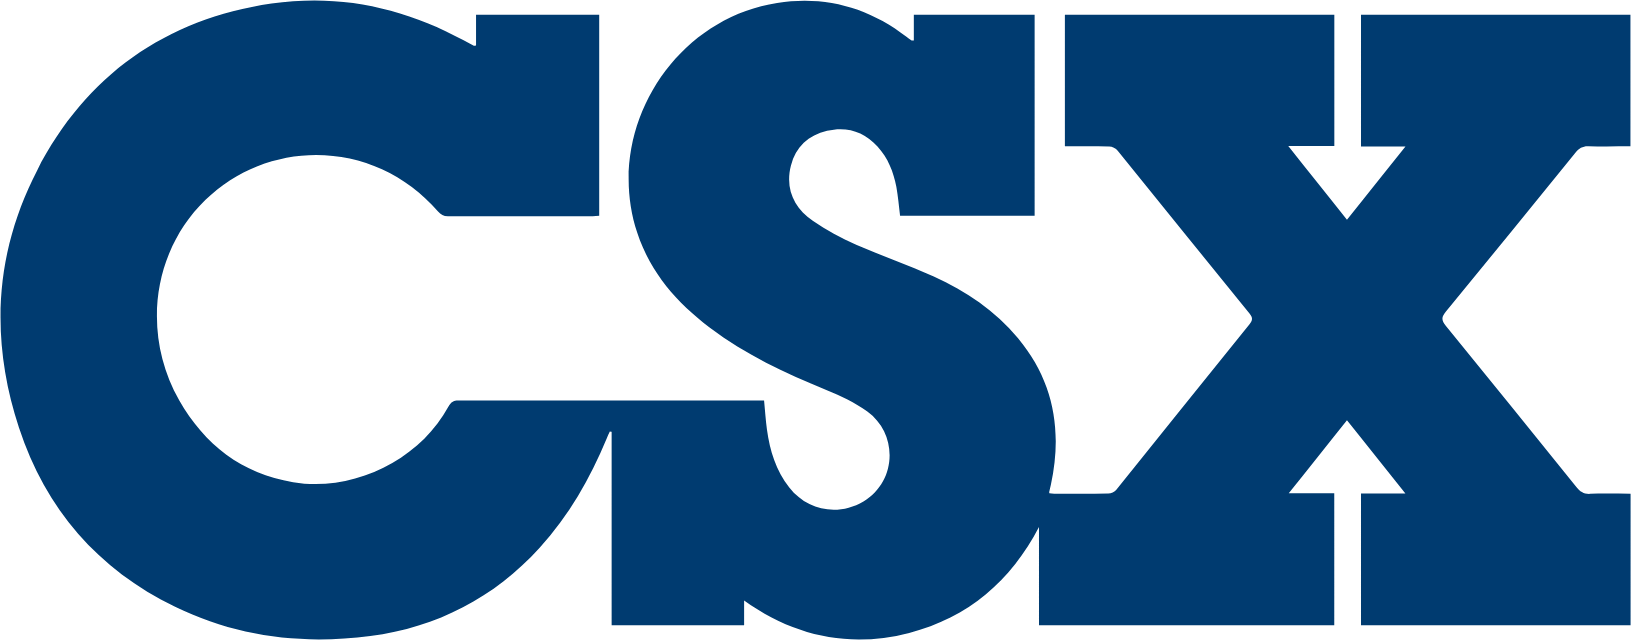 CSX Corporation logo (PNG transparent)